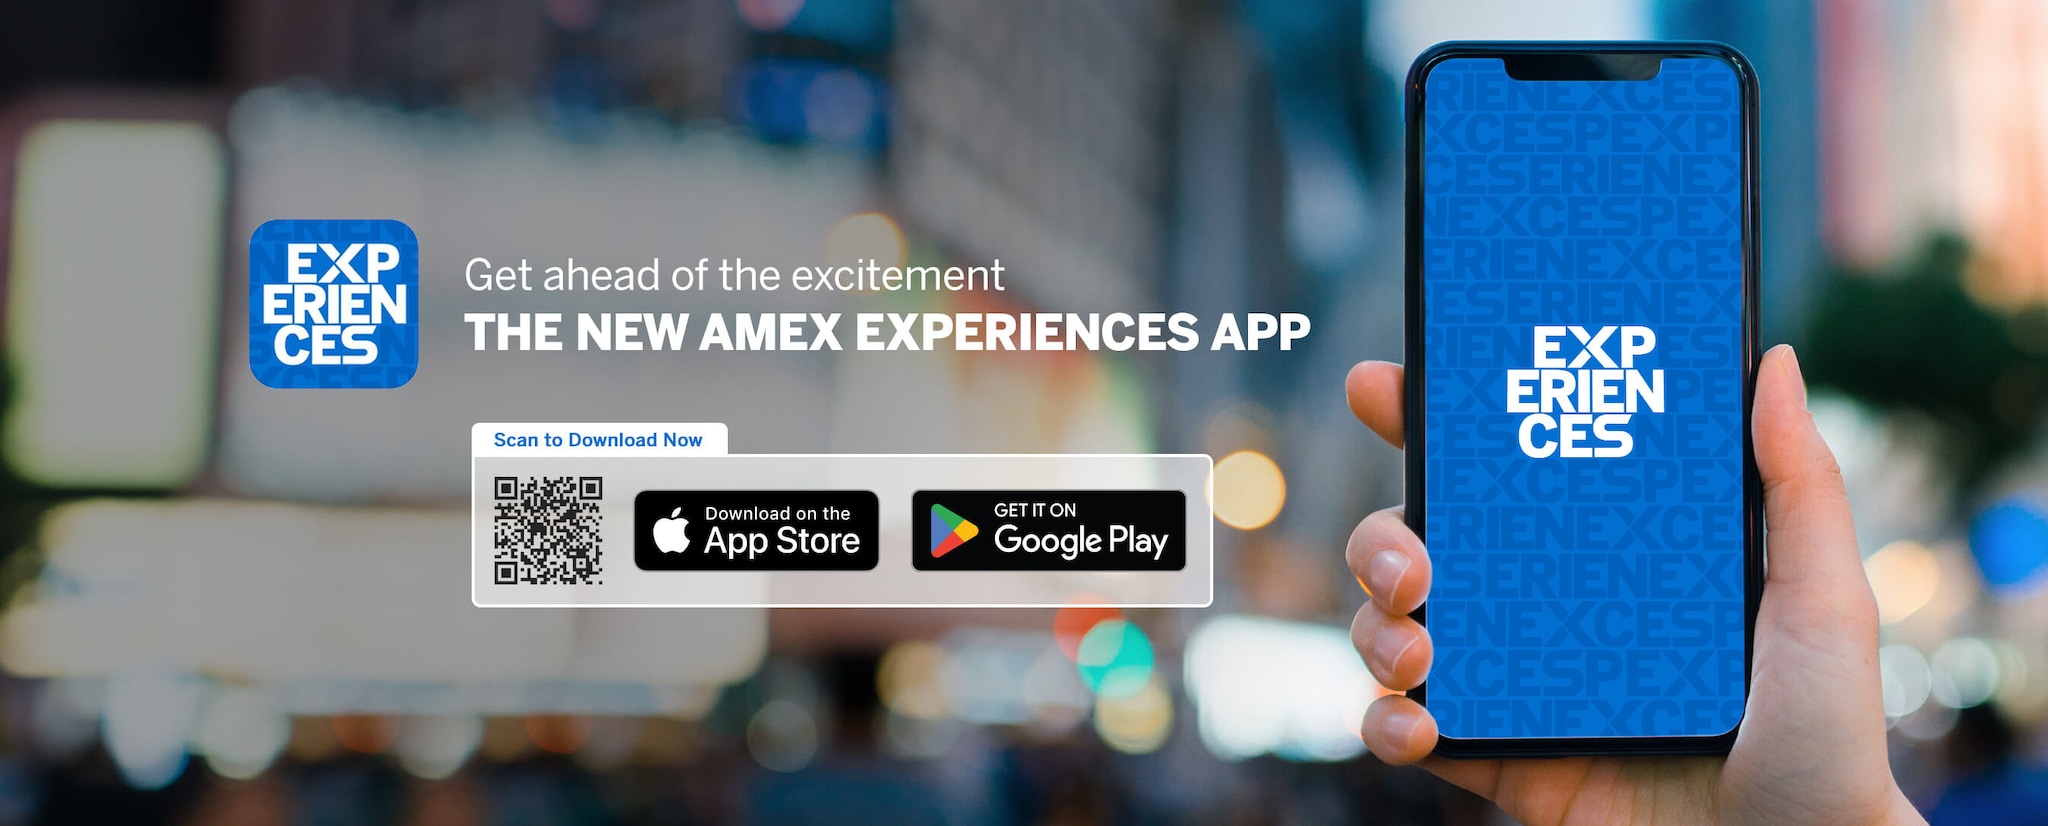 amex travel online hk